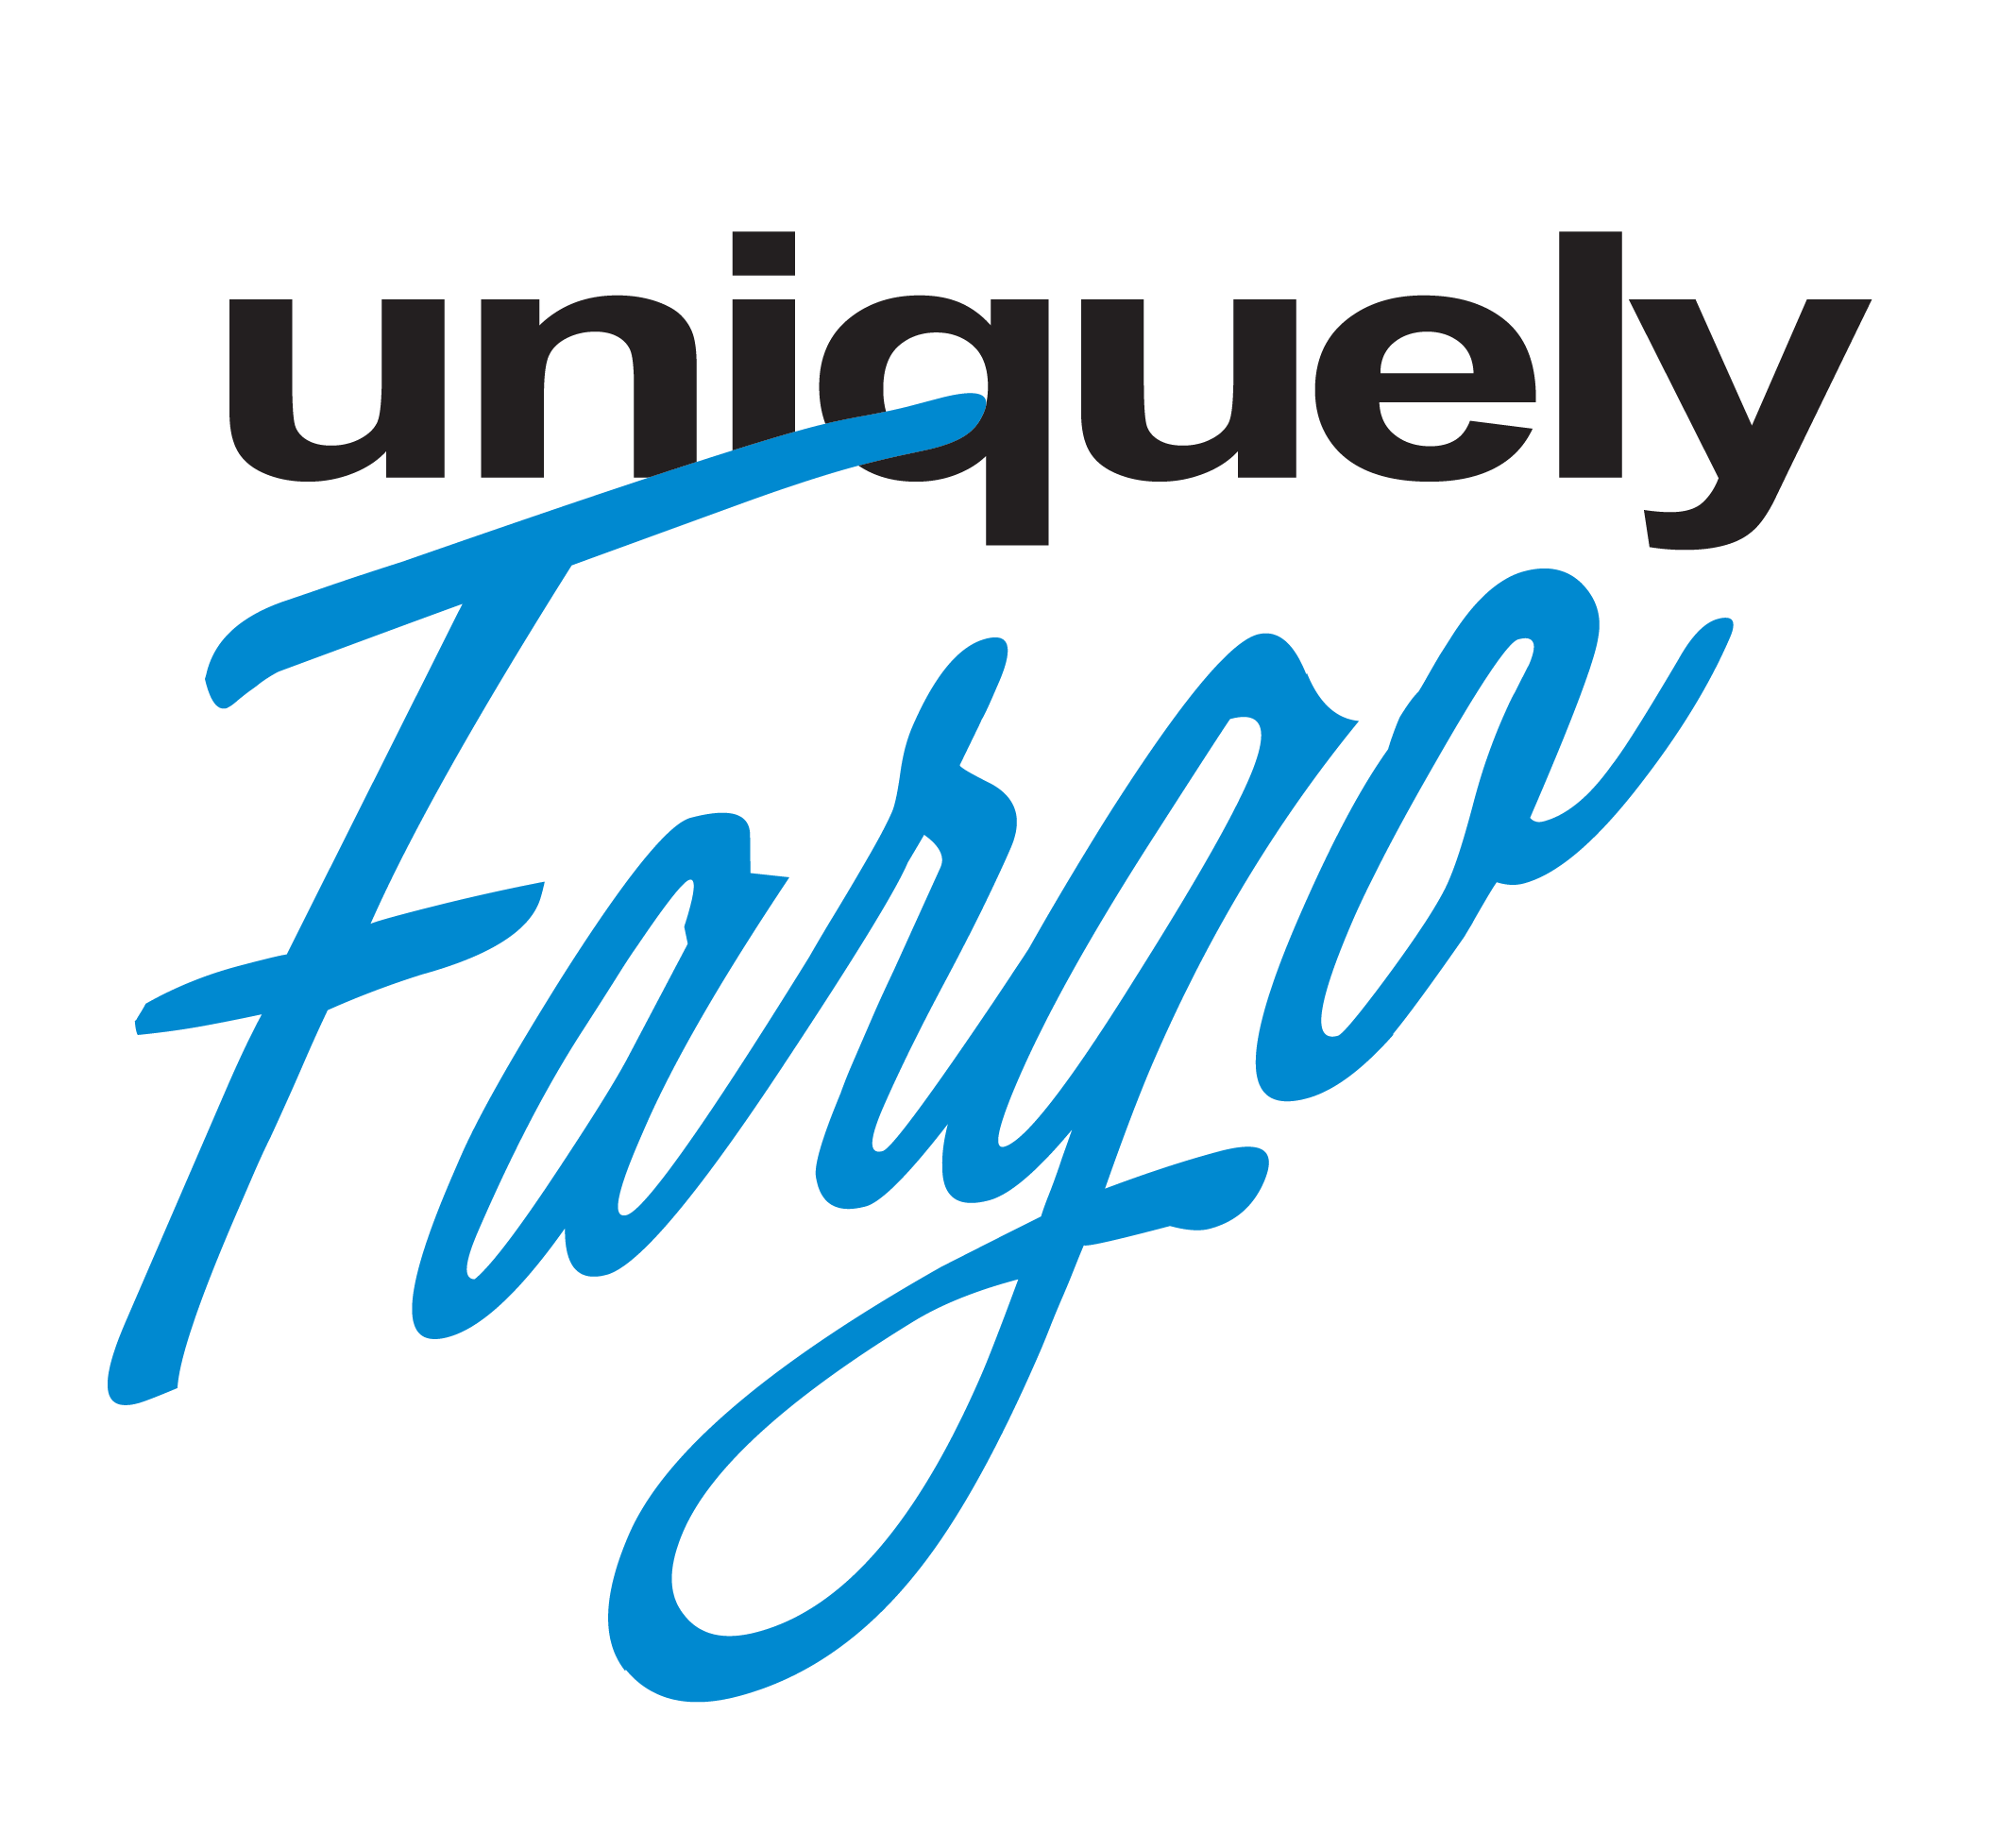 This image shows the Uniquely Fargo logo.